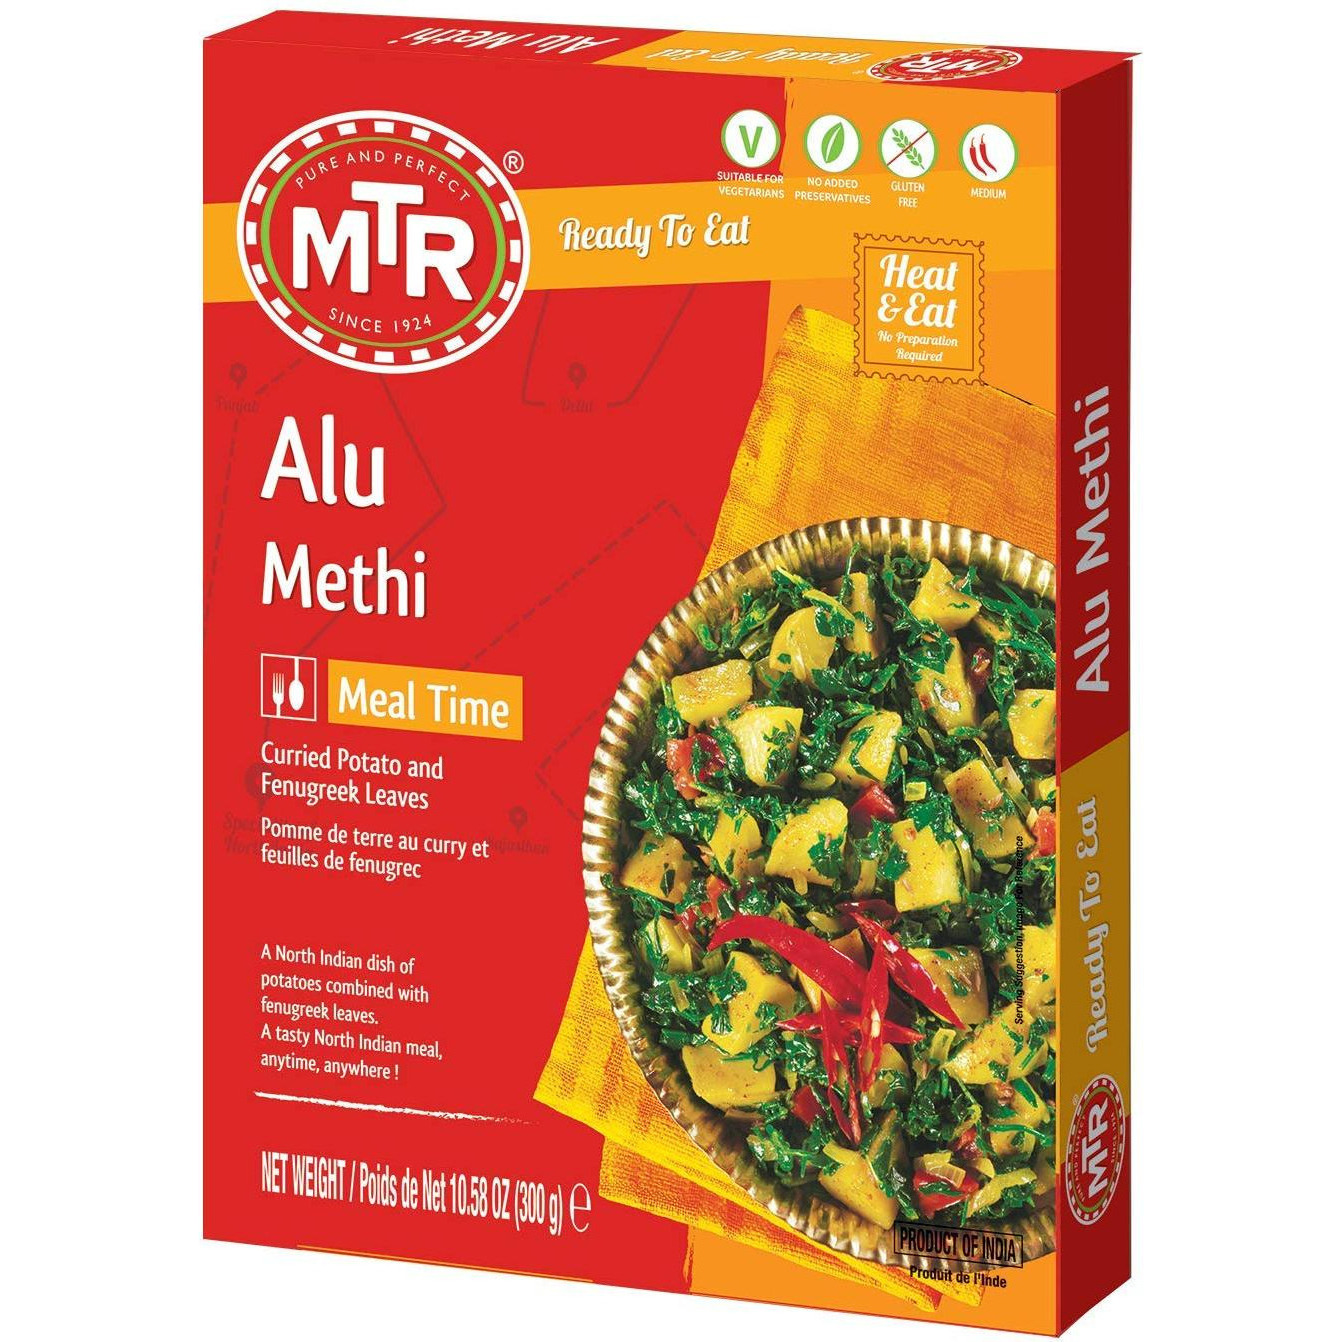 Case of 20 - Mtr Ready To Eat Alu Methi - 300 Gm (10.5 Oz)